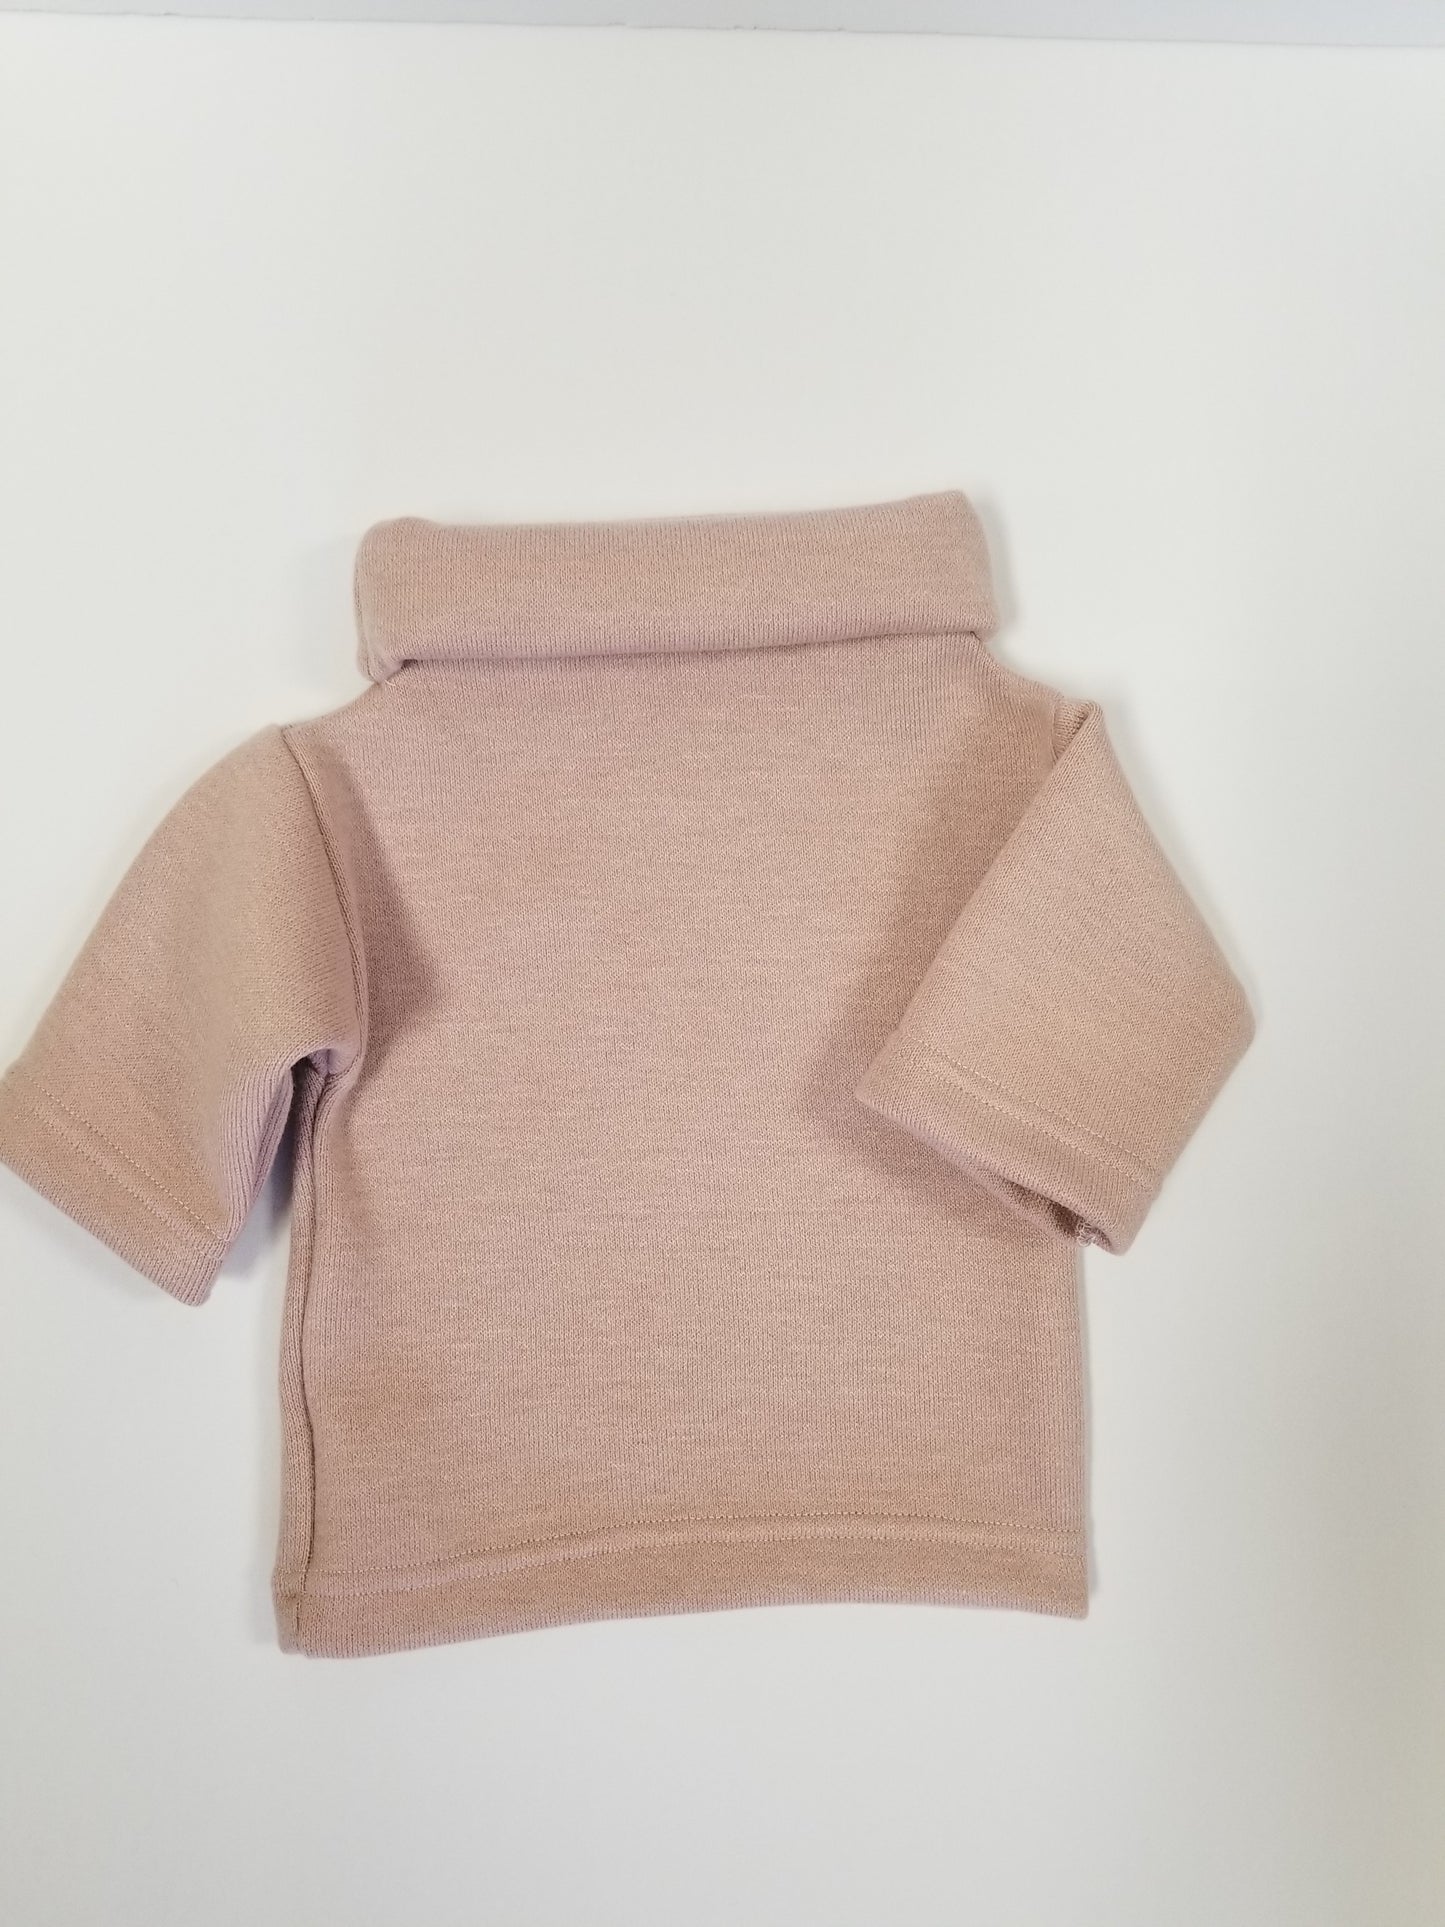 OHWOW Baby Sweater